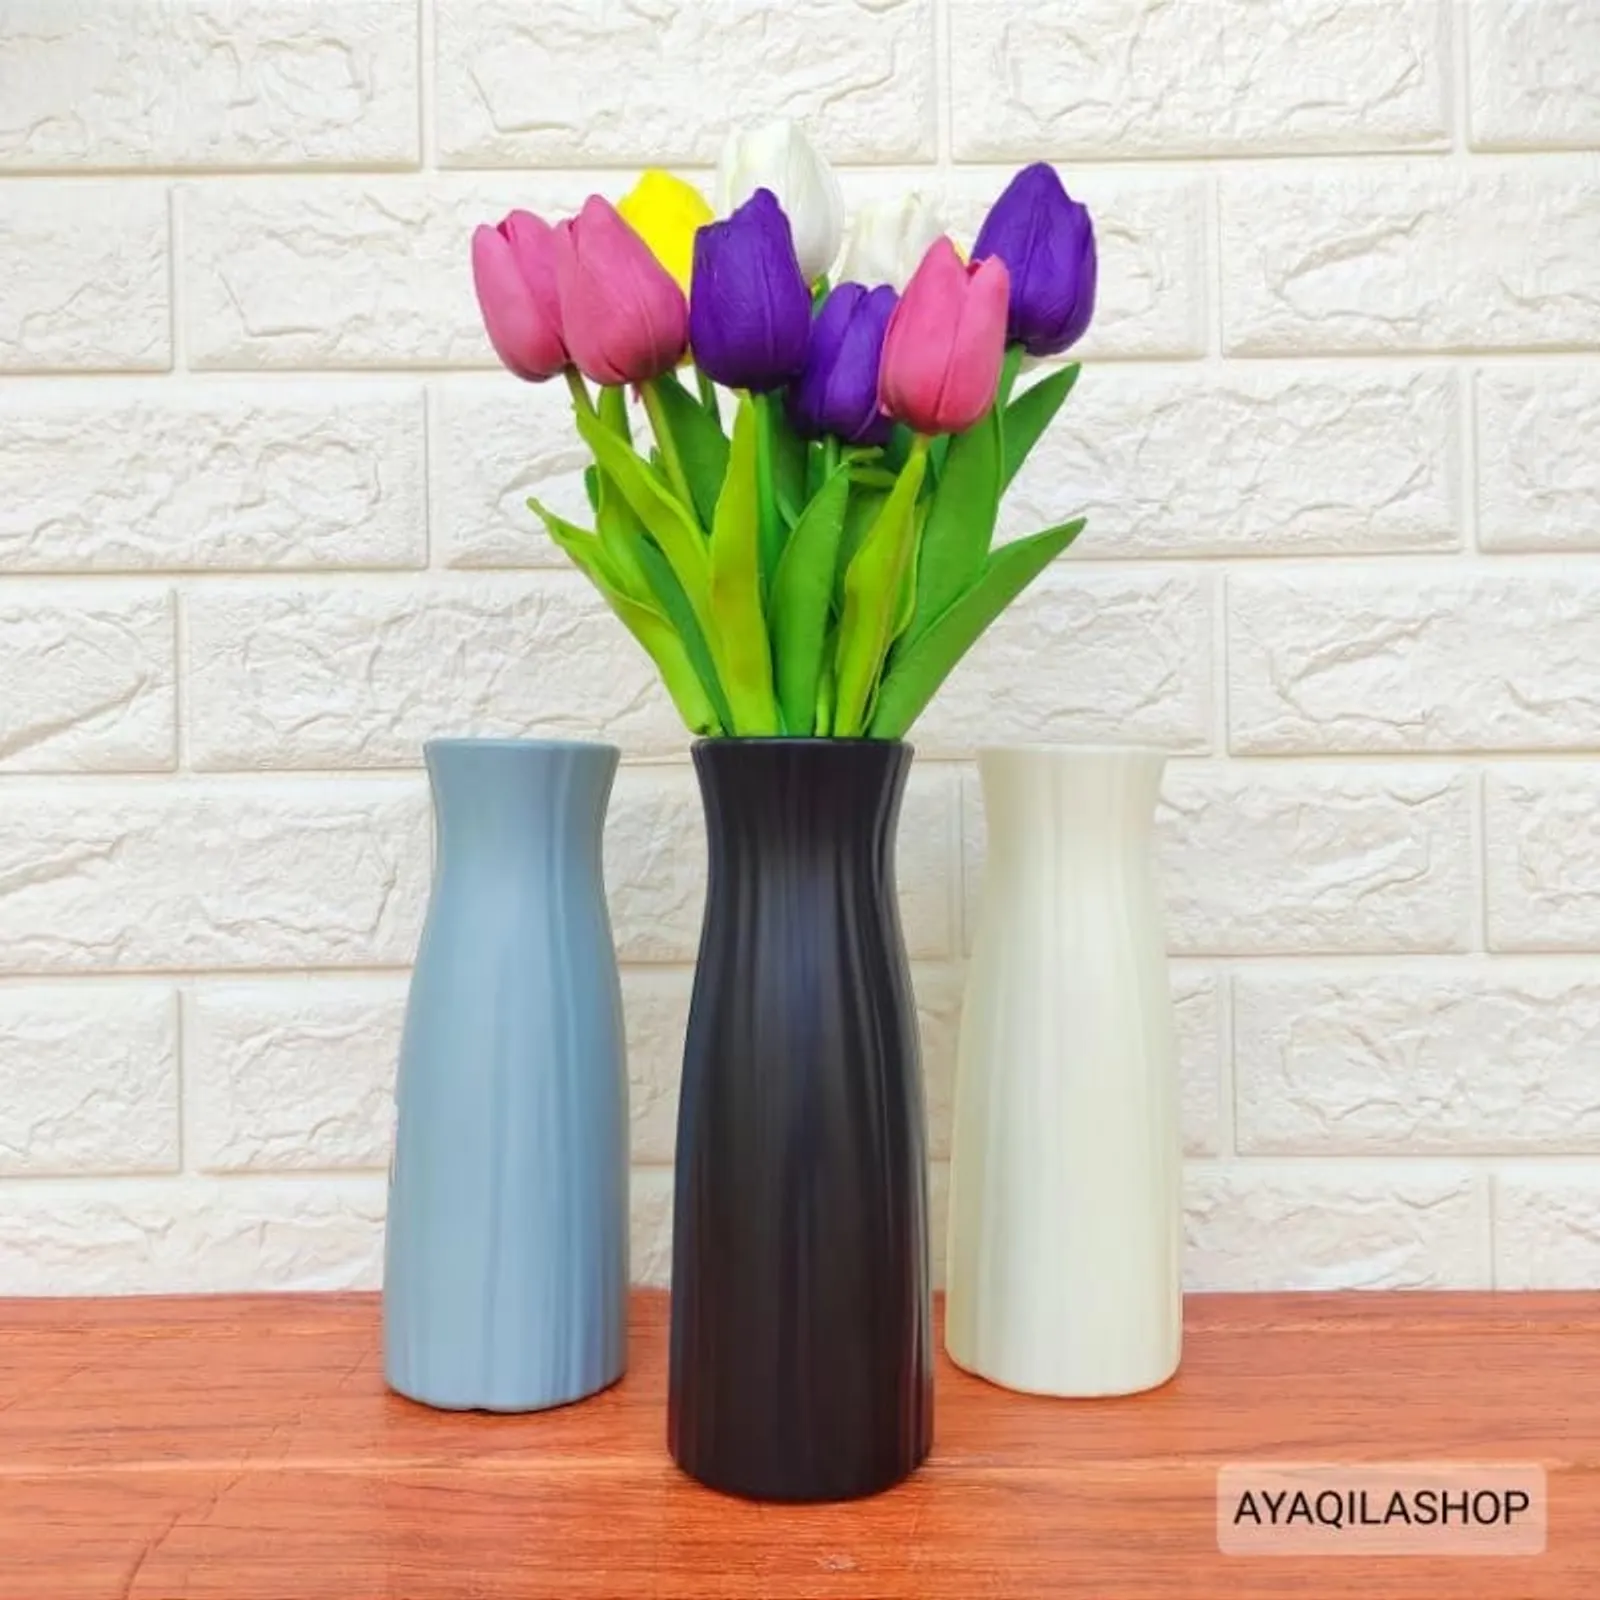 15 Rekomendasi Pot Bunga Plastik, Cocok untuk Hiasan Rumah Estetik